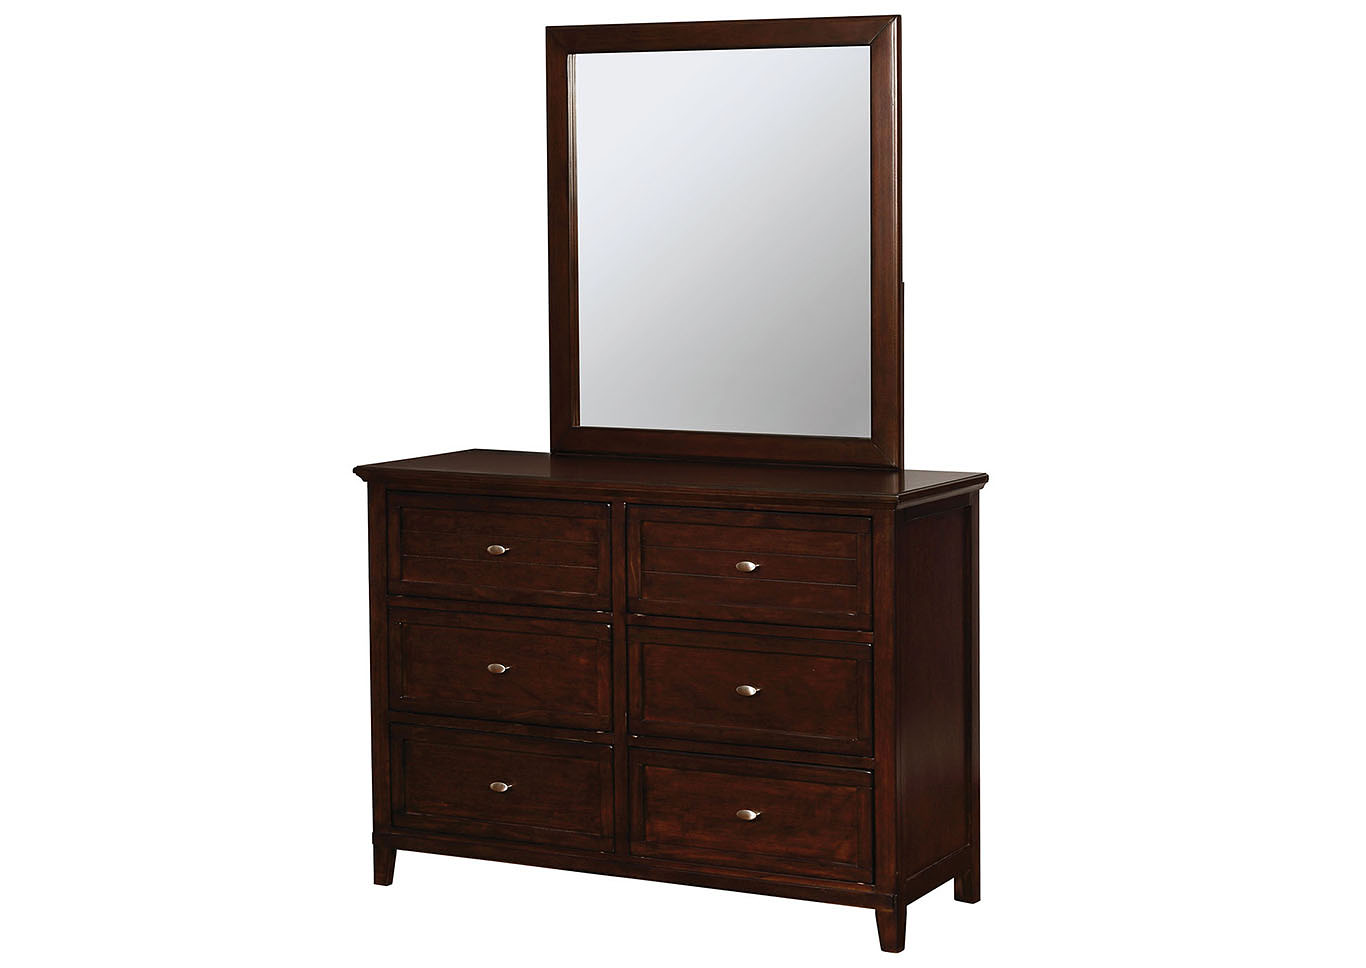 Brogan Brown Twin Sleigh Bed w/Dresser and Mirror,Furniture of America